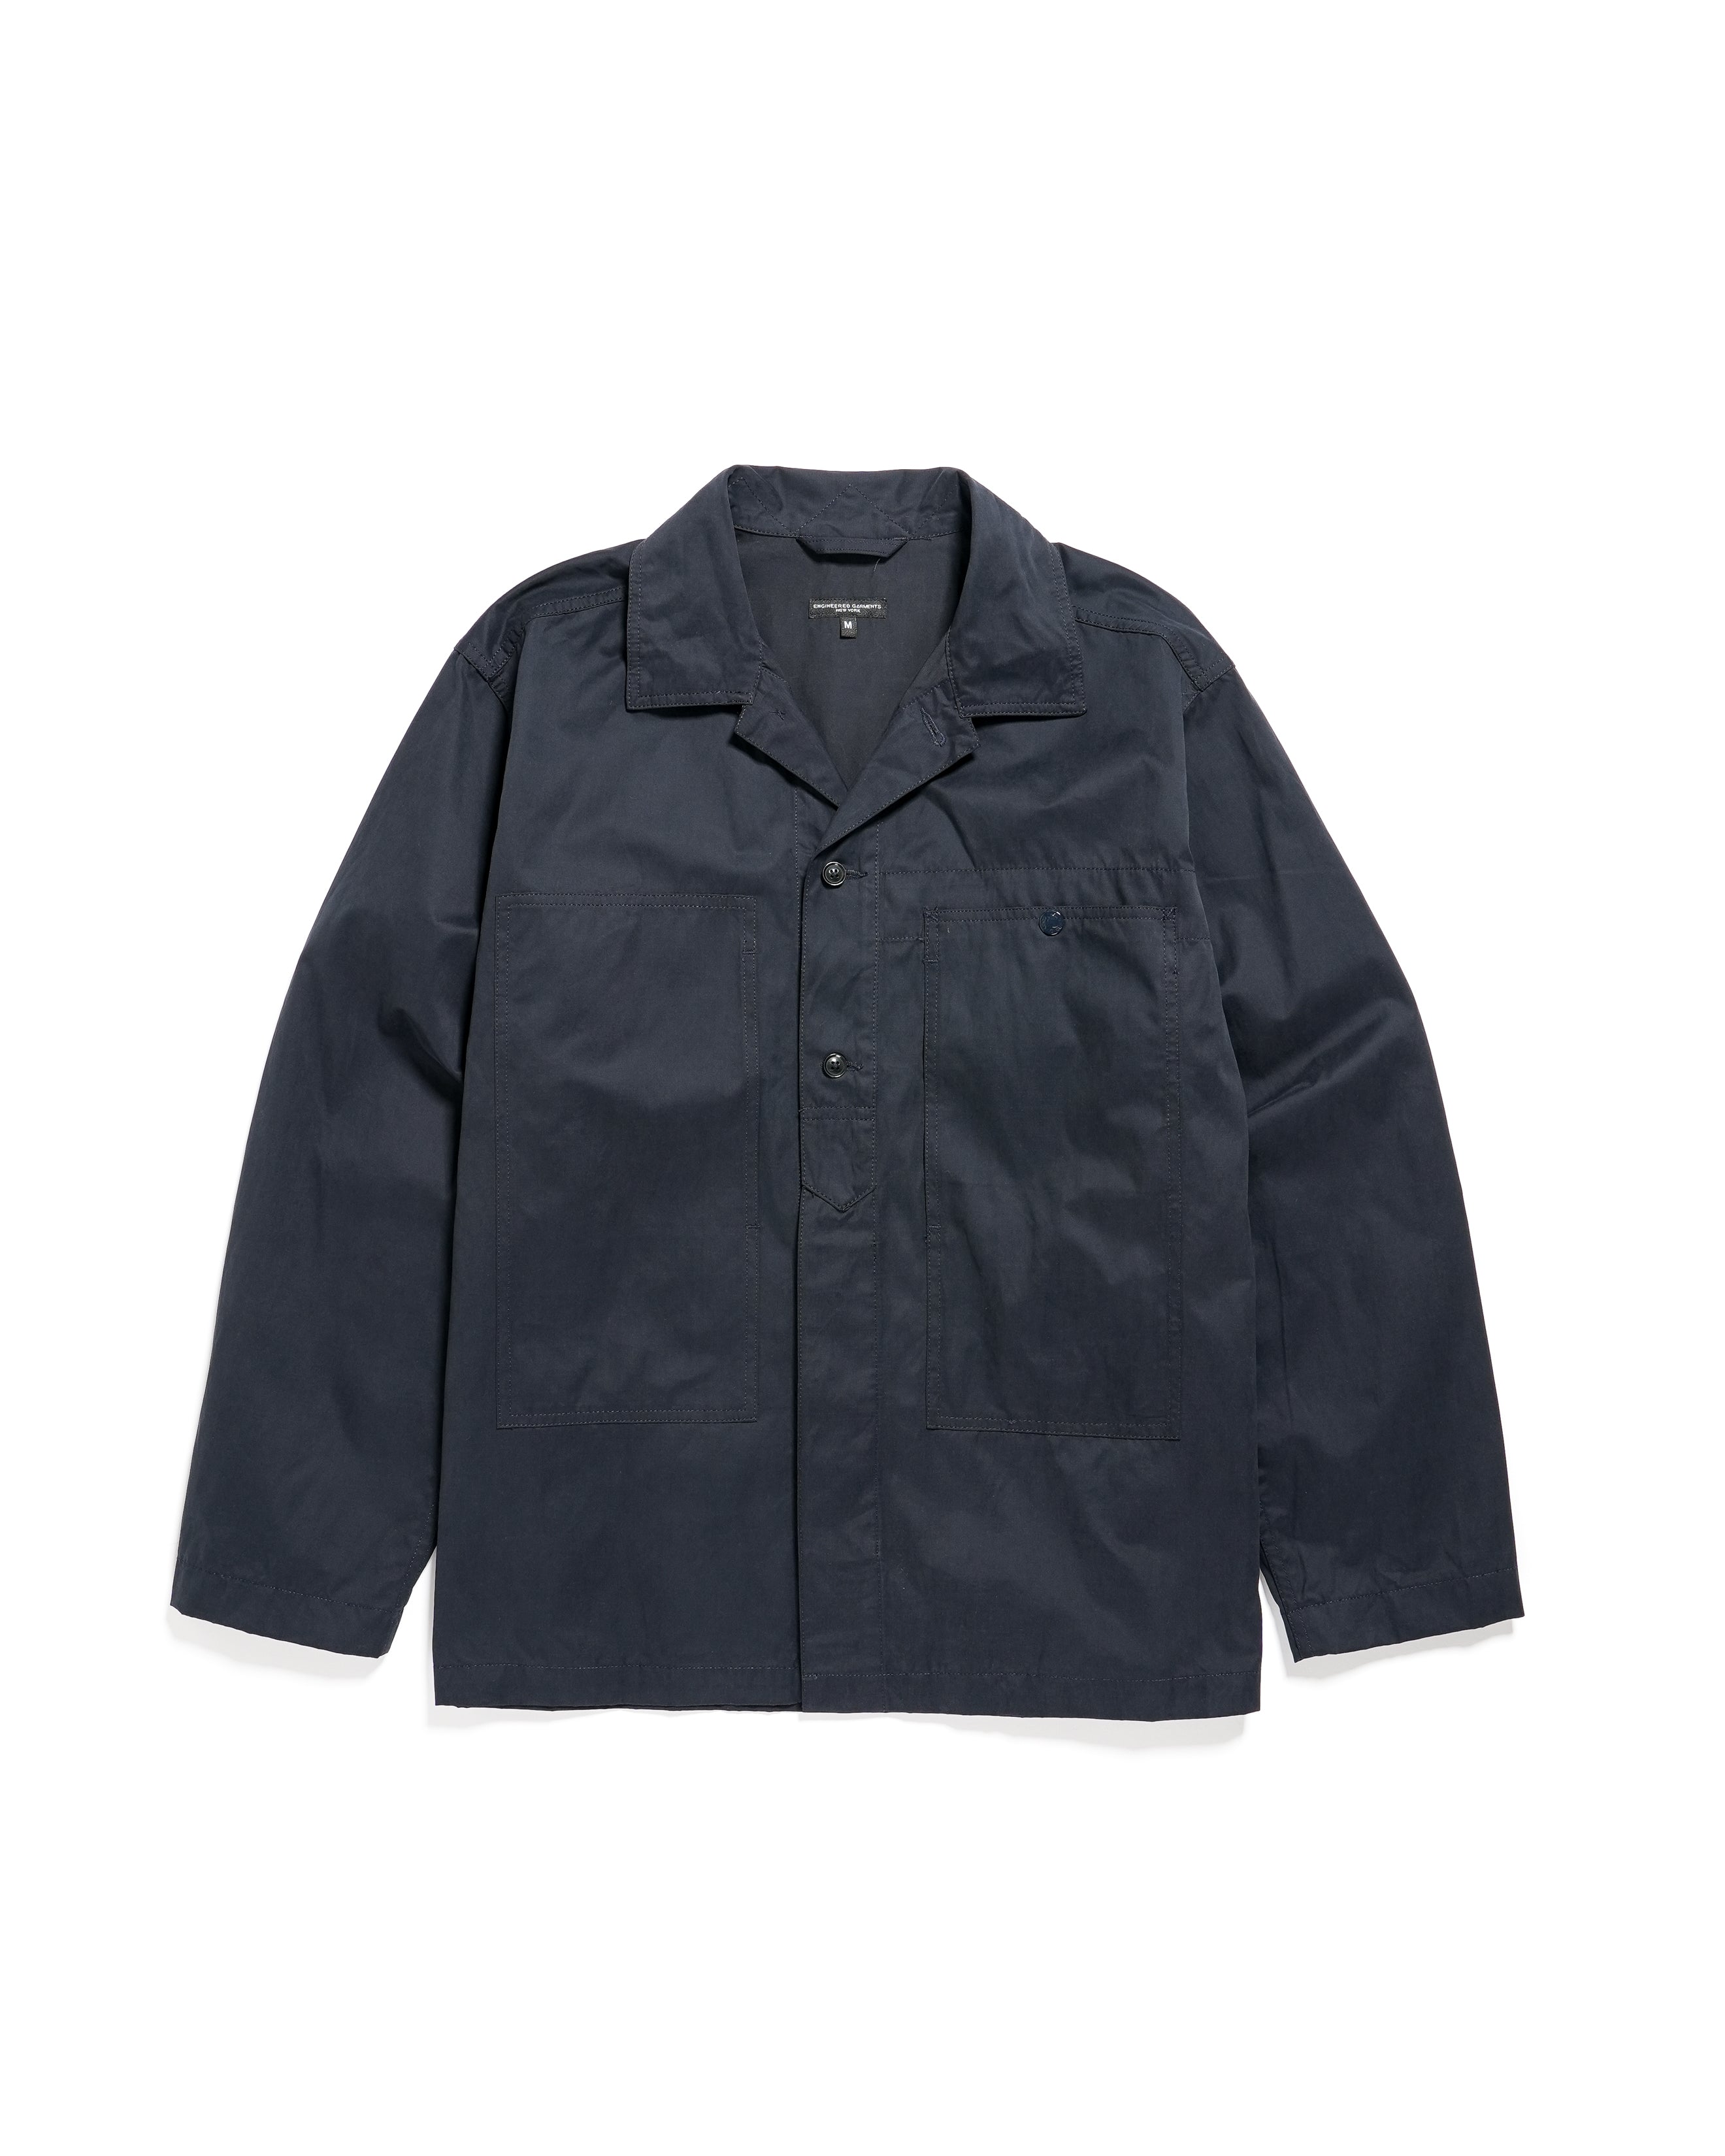 Fatigue Shirt Jacket - Dk. Navy PC Coated Cloth - NNY SP